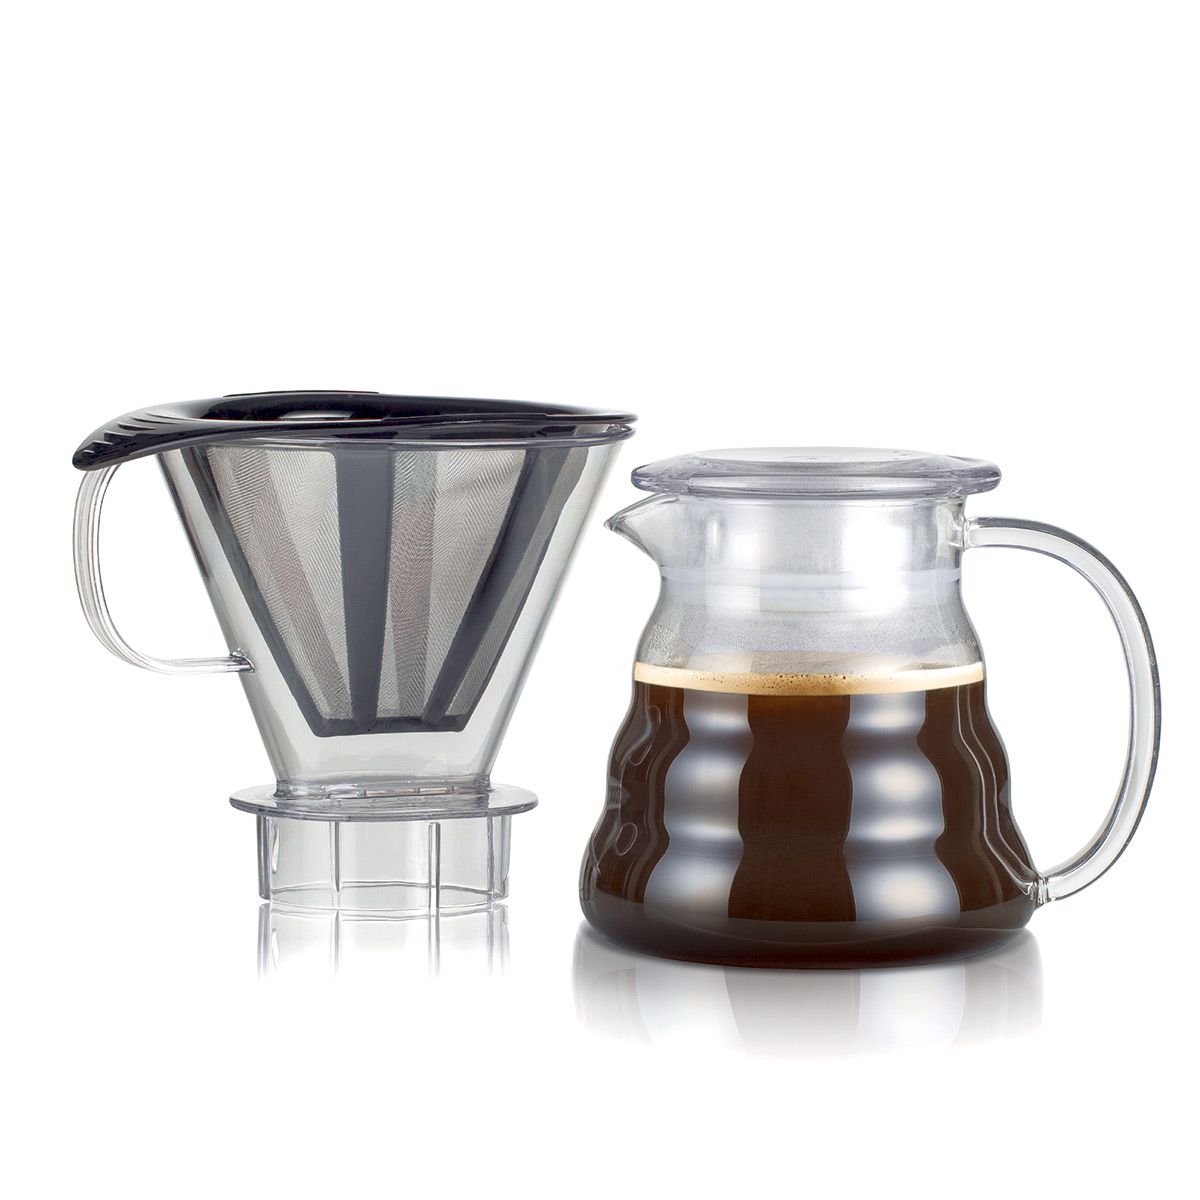 Cafetera Bodum Melior con filtro de café permanente 2.5 tazas